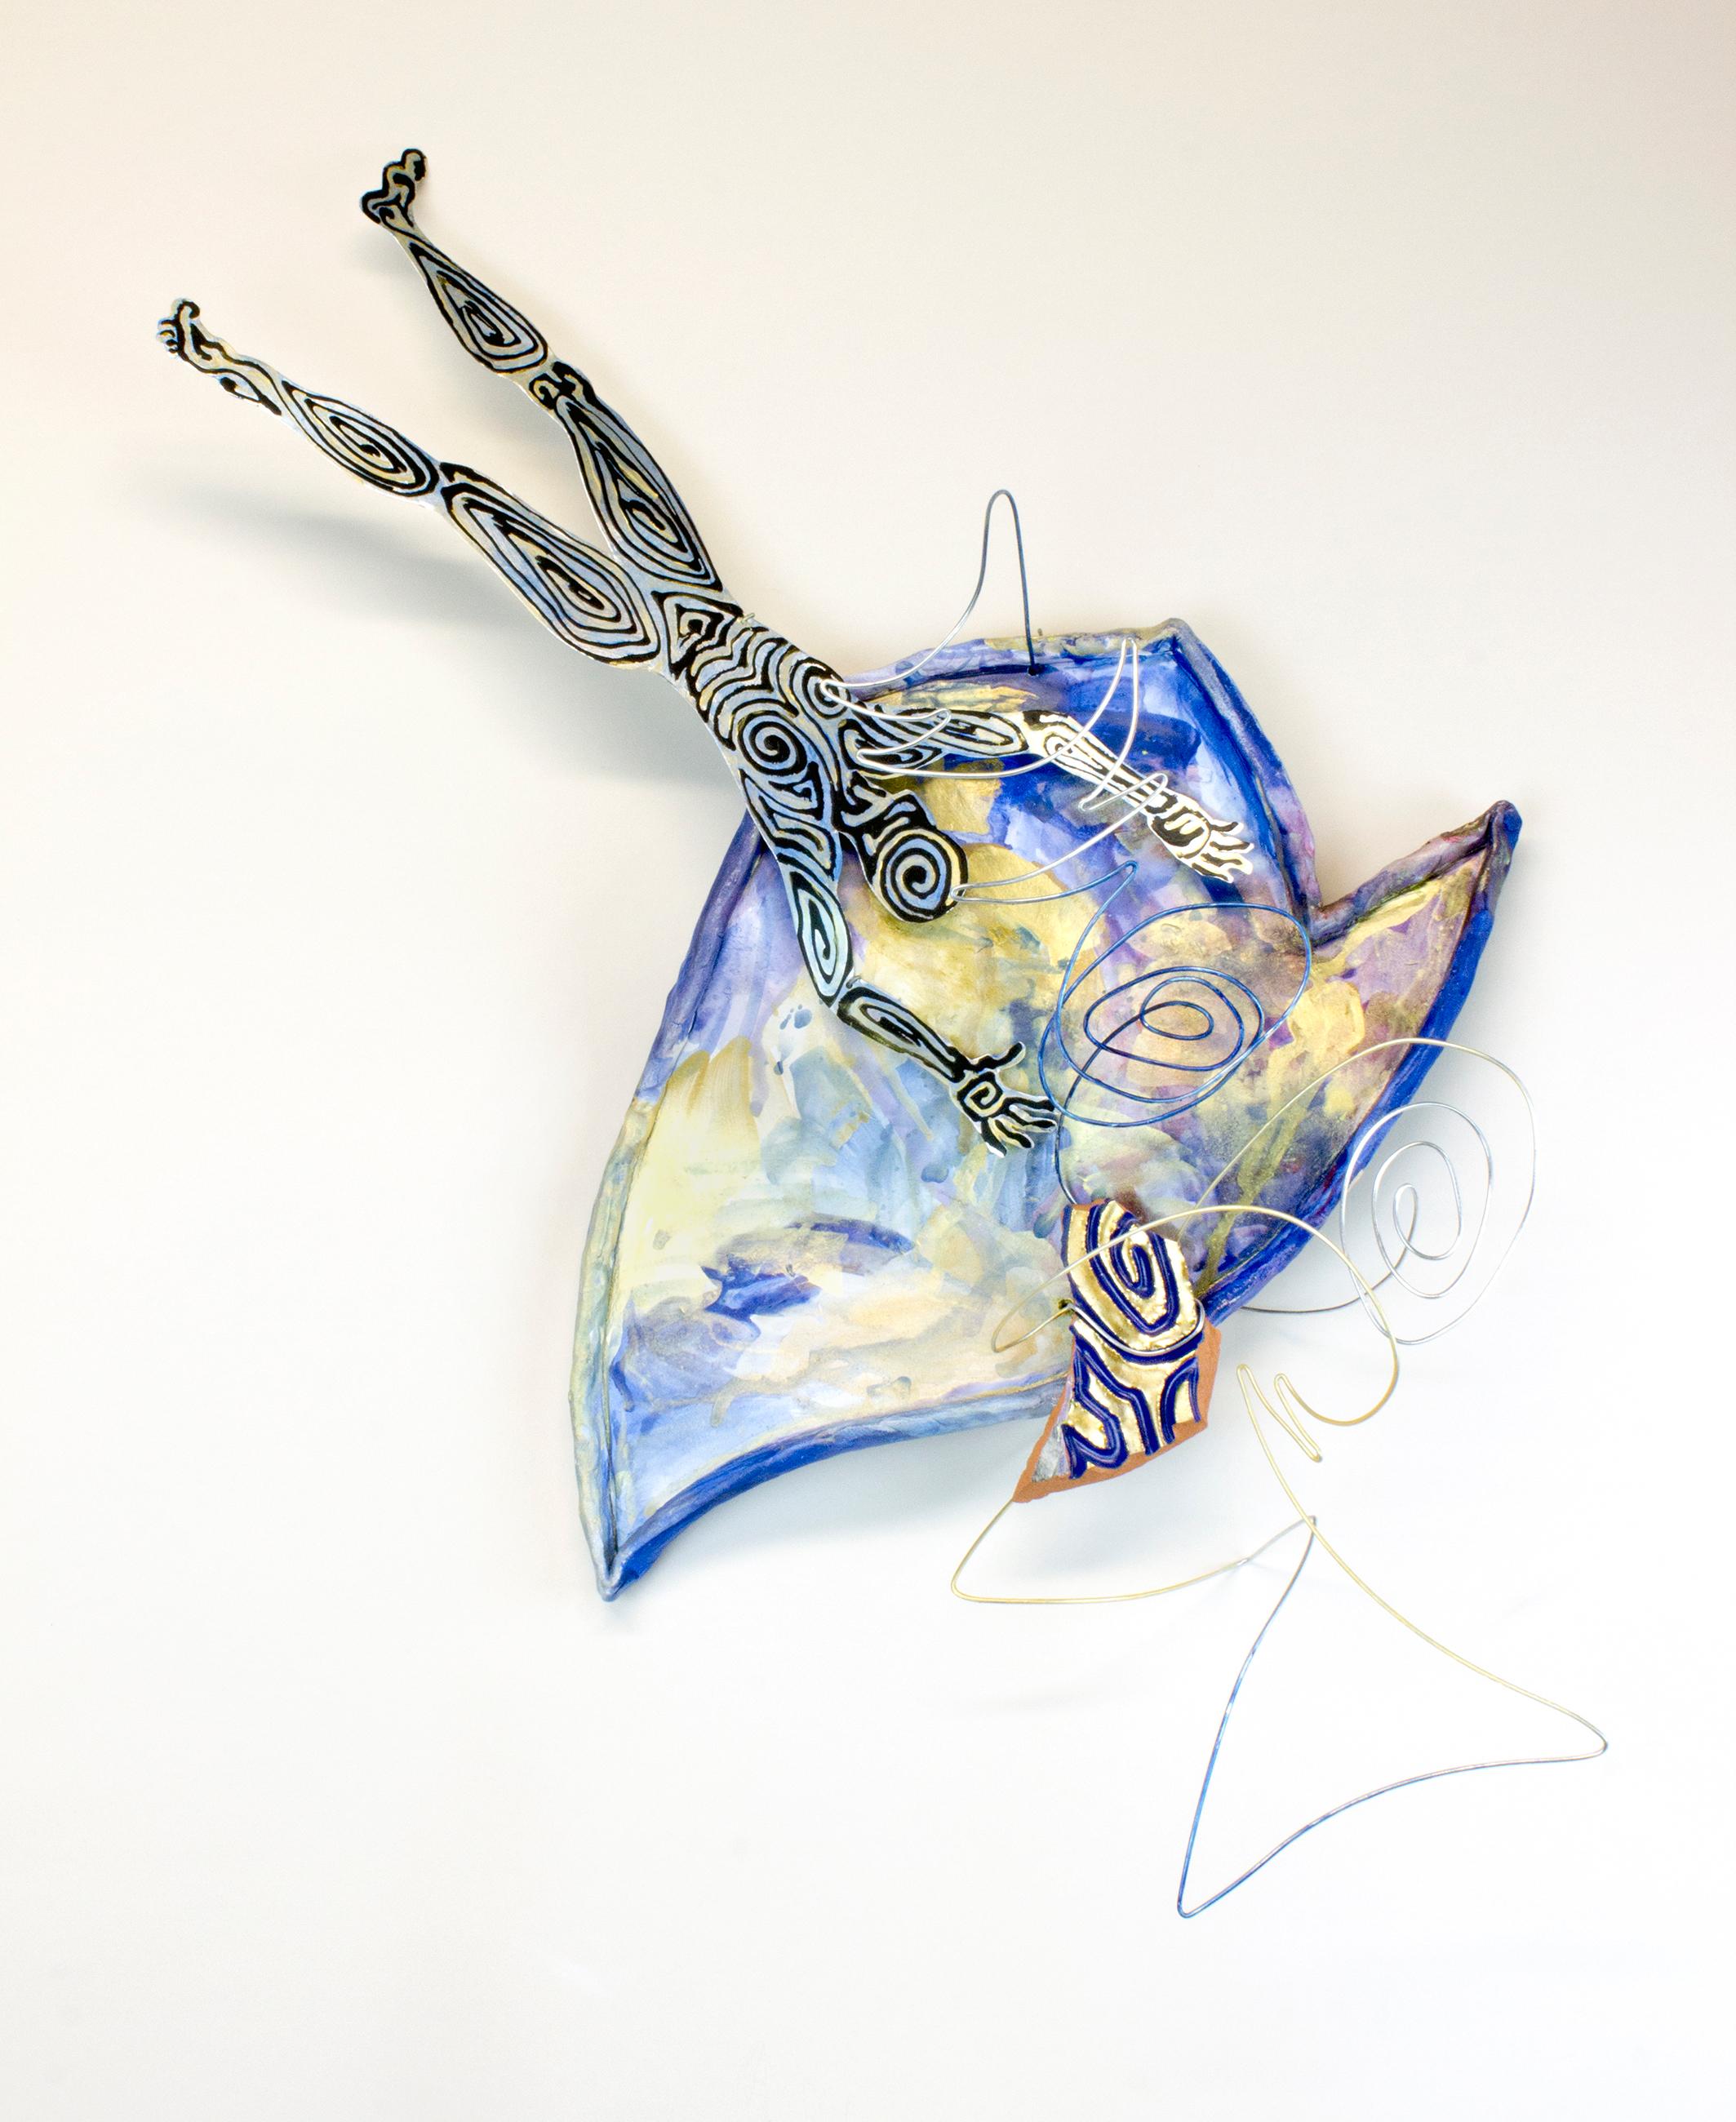 "Floundering", contemporary, blue, gold, black, metal, ceramic, sculpture - Mixed Media Art by Virginia Mahoney